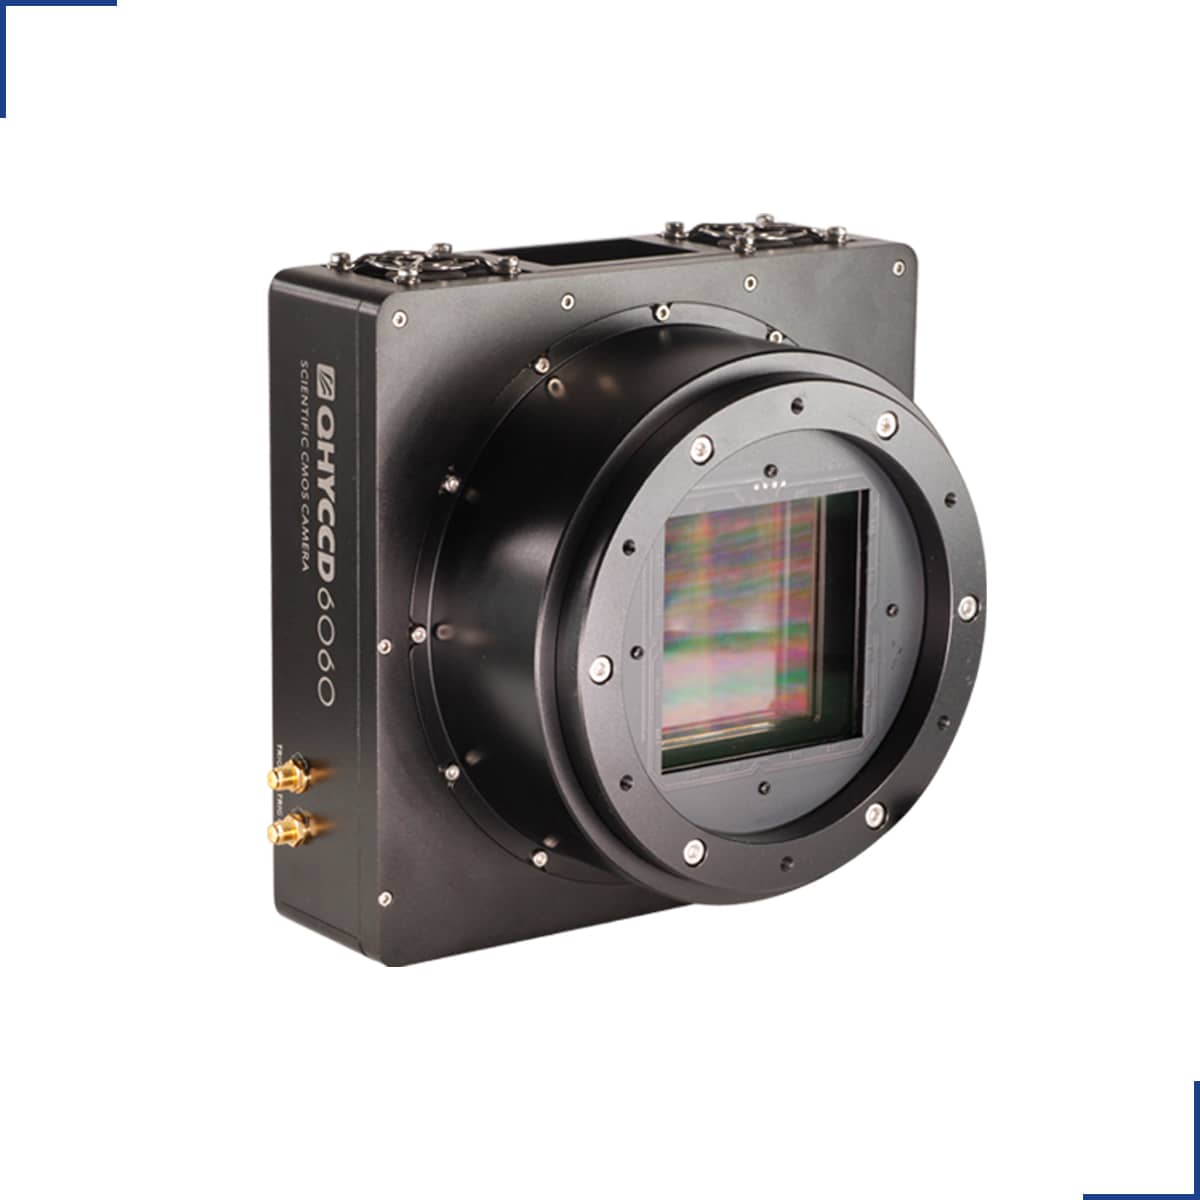 QHYCCD astrocamera ASI Sony IMX deepsky 
天文相机 深空相机 制冷相机